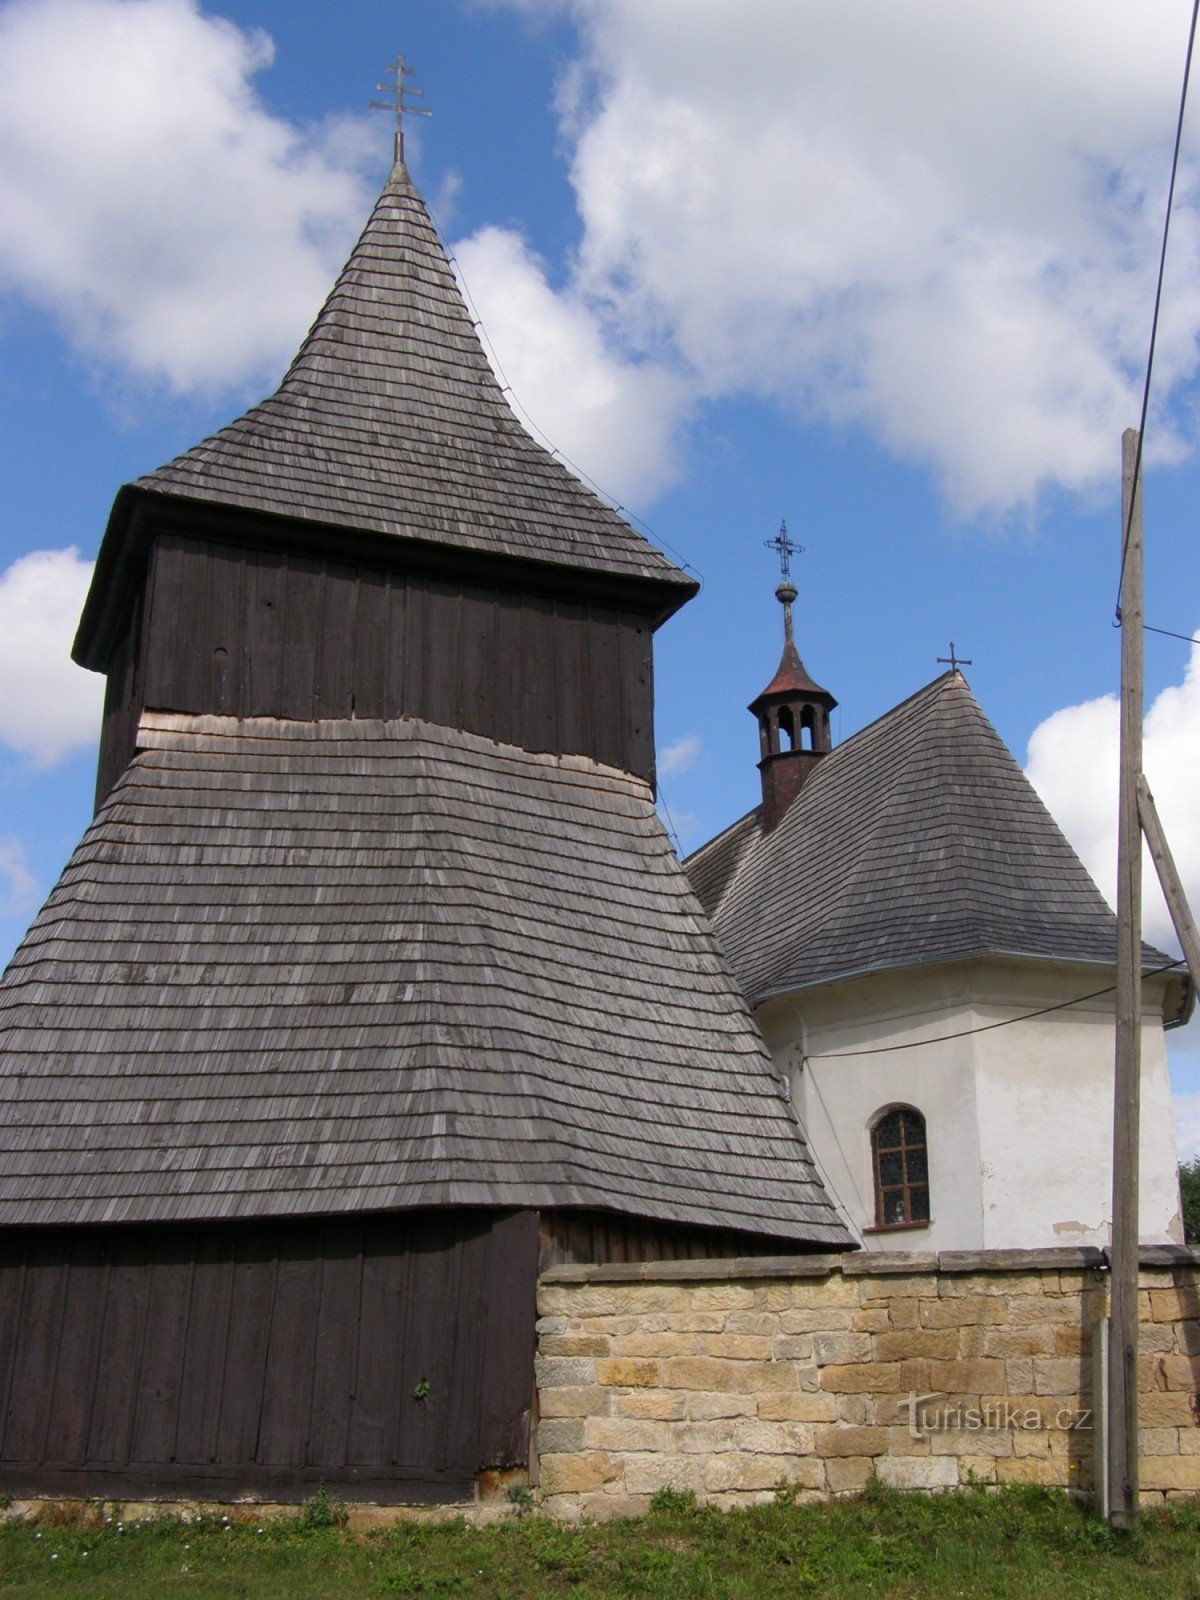 Vysočany - 圣木教堂有木制钟楼的市场